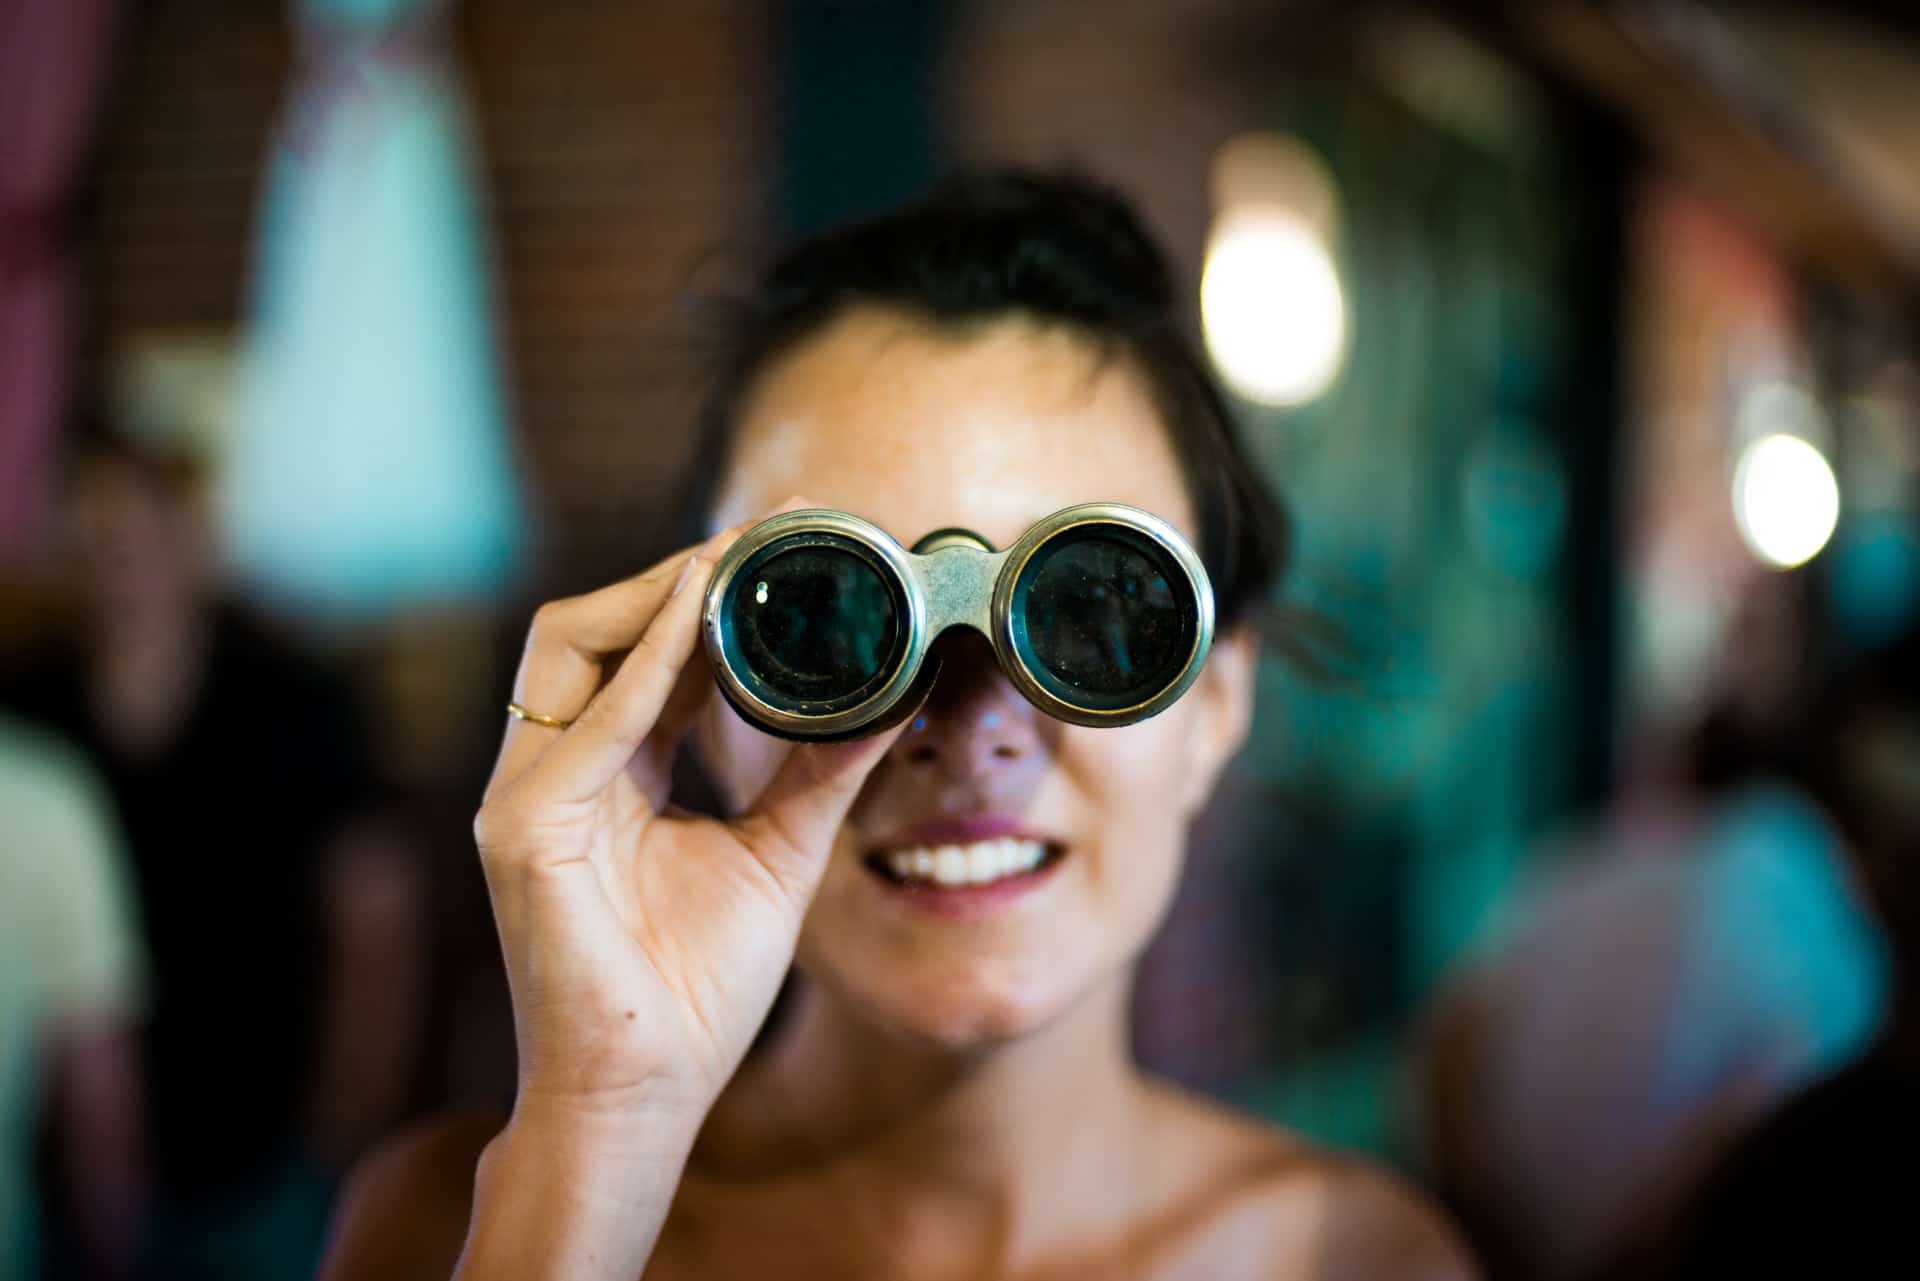 a girl looking through Binoculars
